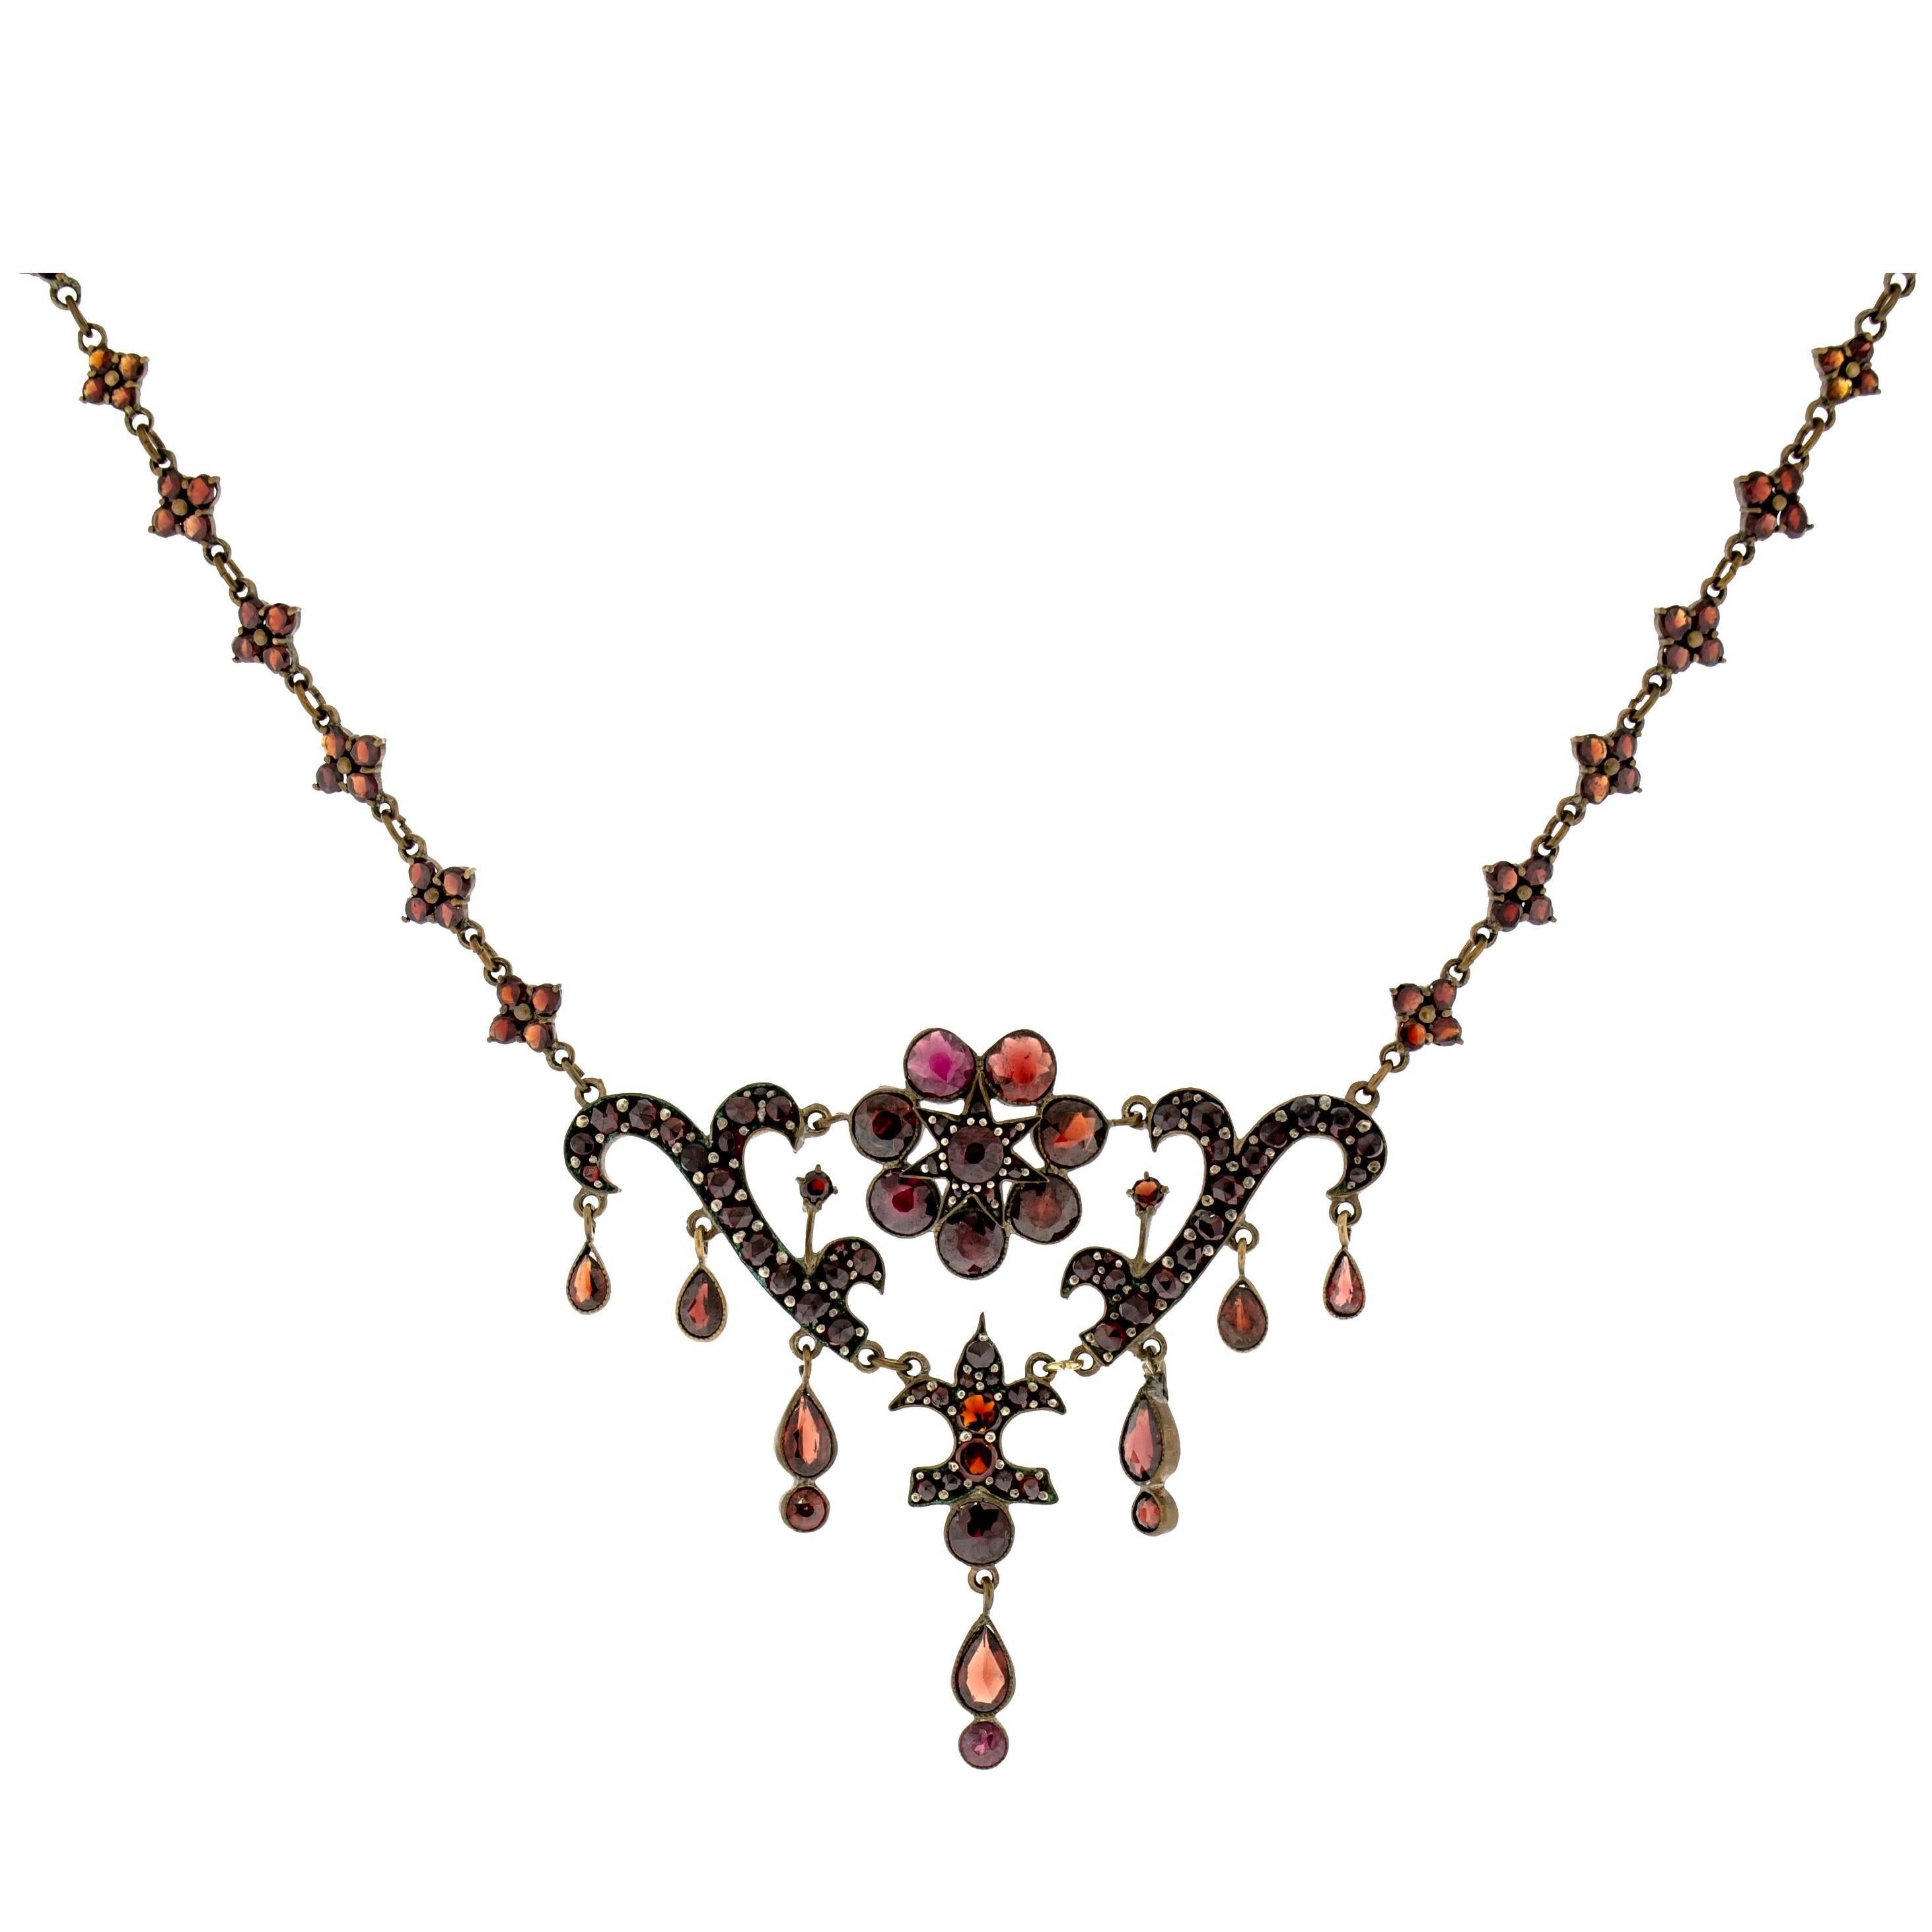 Romantic and Sumptuous Antique Victorian Late 19th Century Garnet Necklace